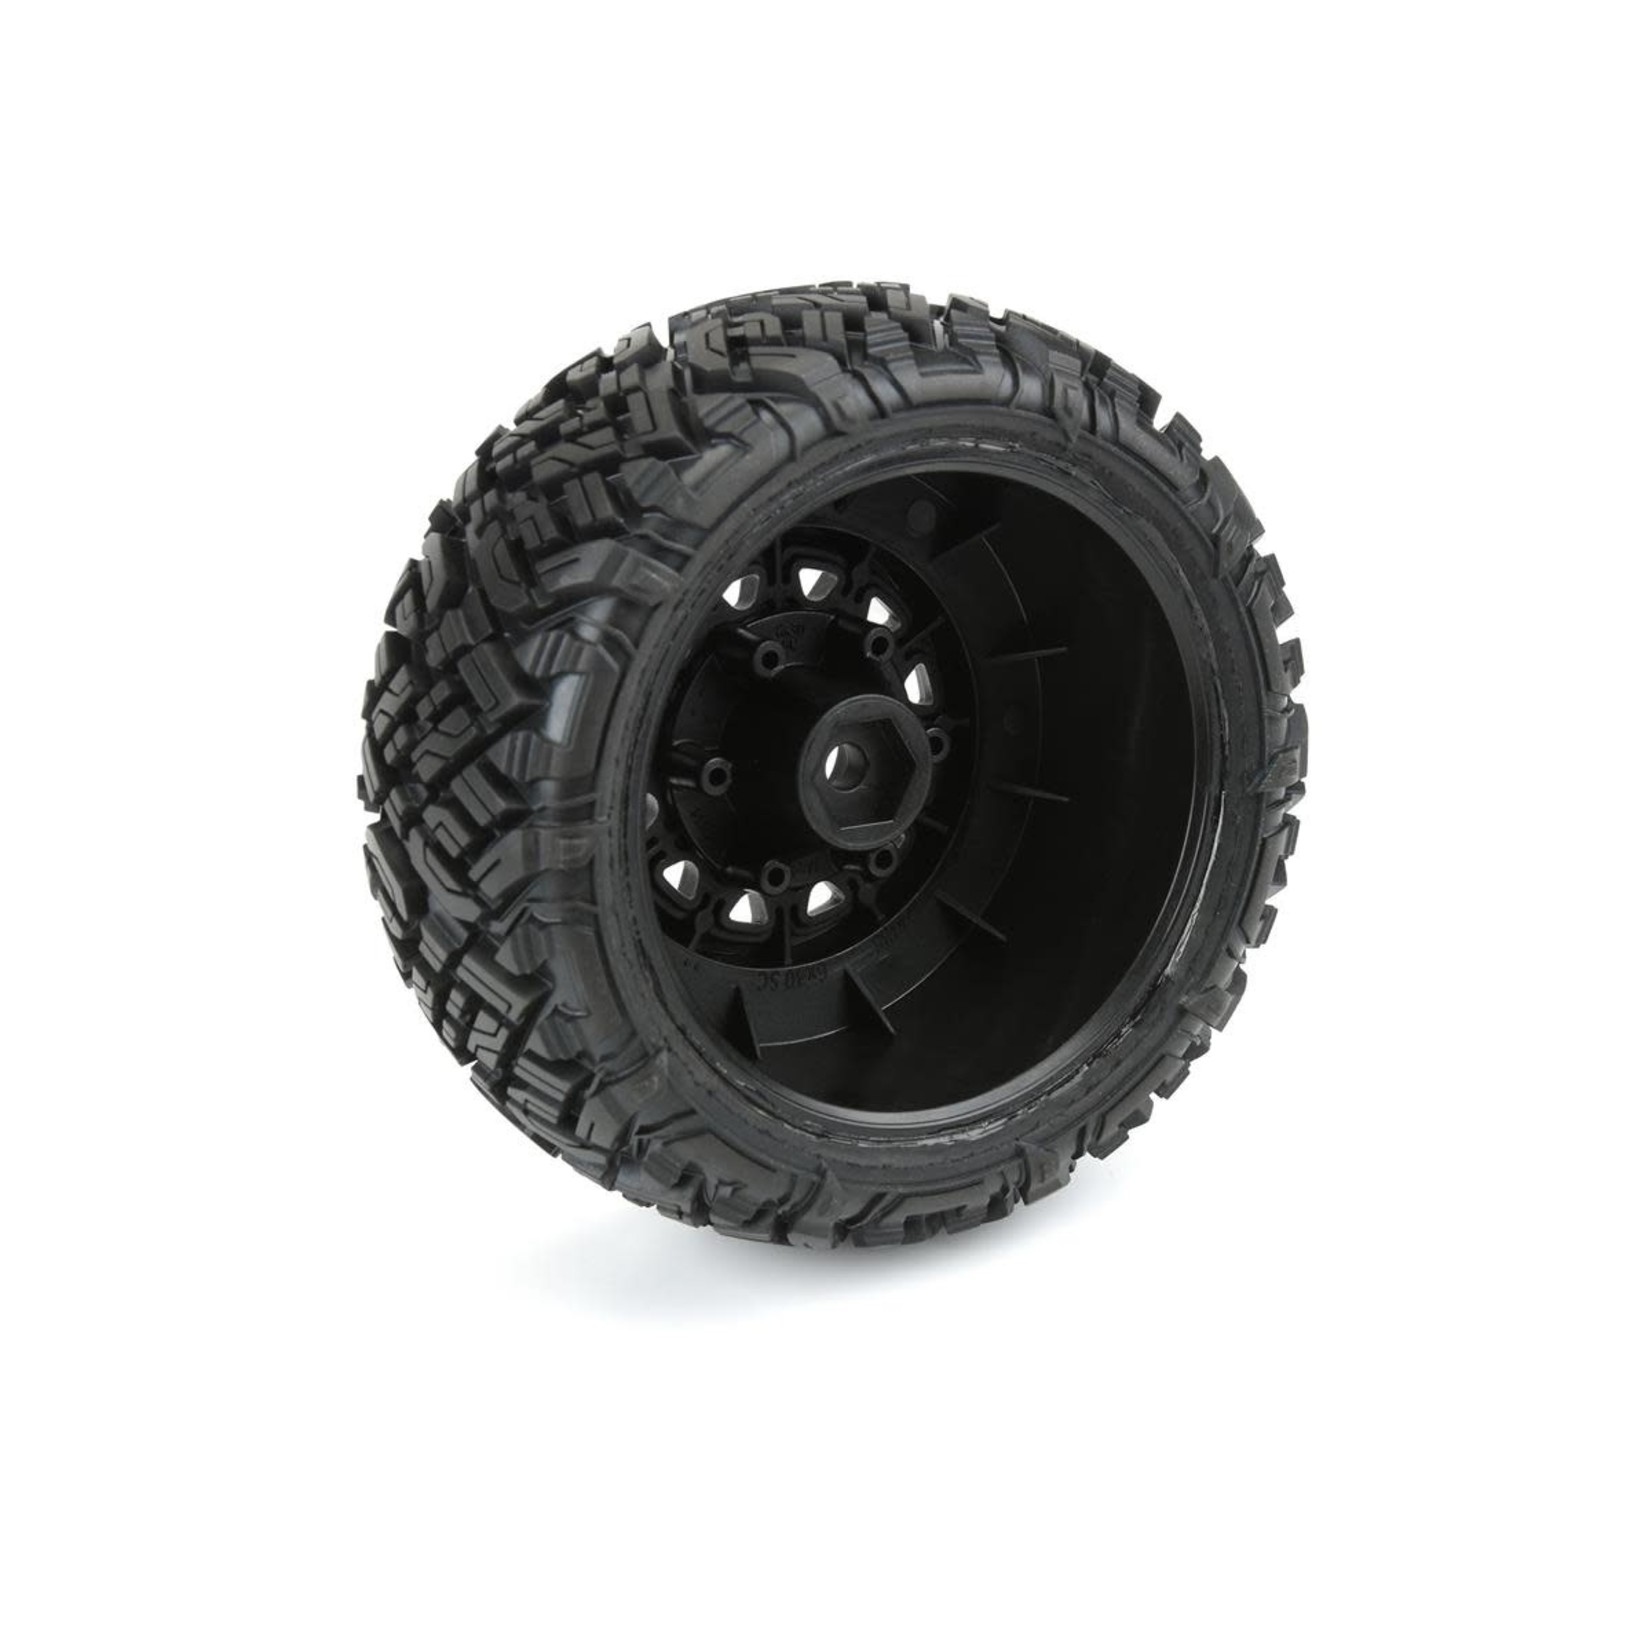 Pro-Line Pro-Line Icon SC Pre-Mounted Tires w/Raid Wheels (Black) (2) (M2) w/Removable 12mm Hex #10182-10